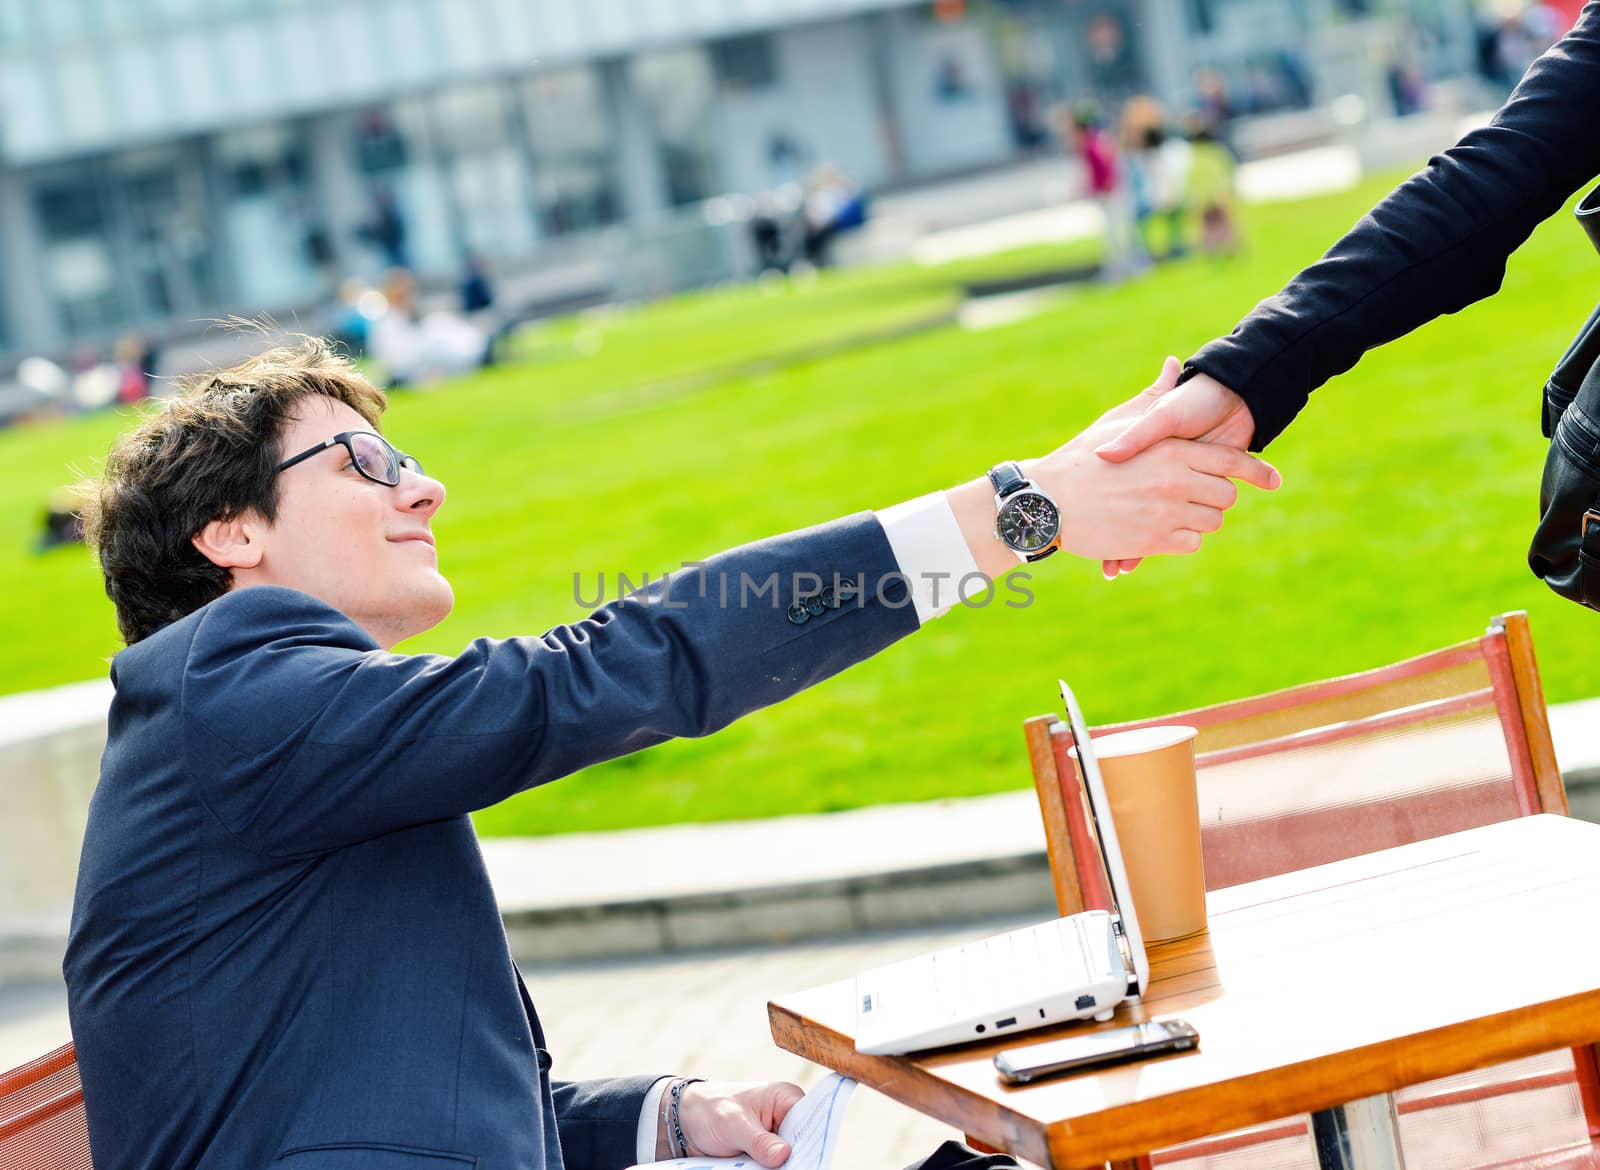 Junior executives dynamics shaking hands